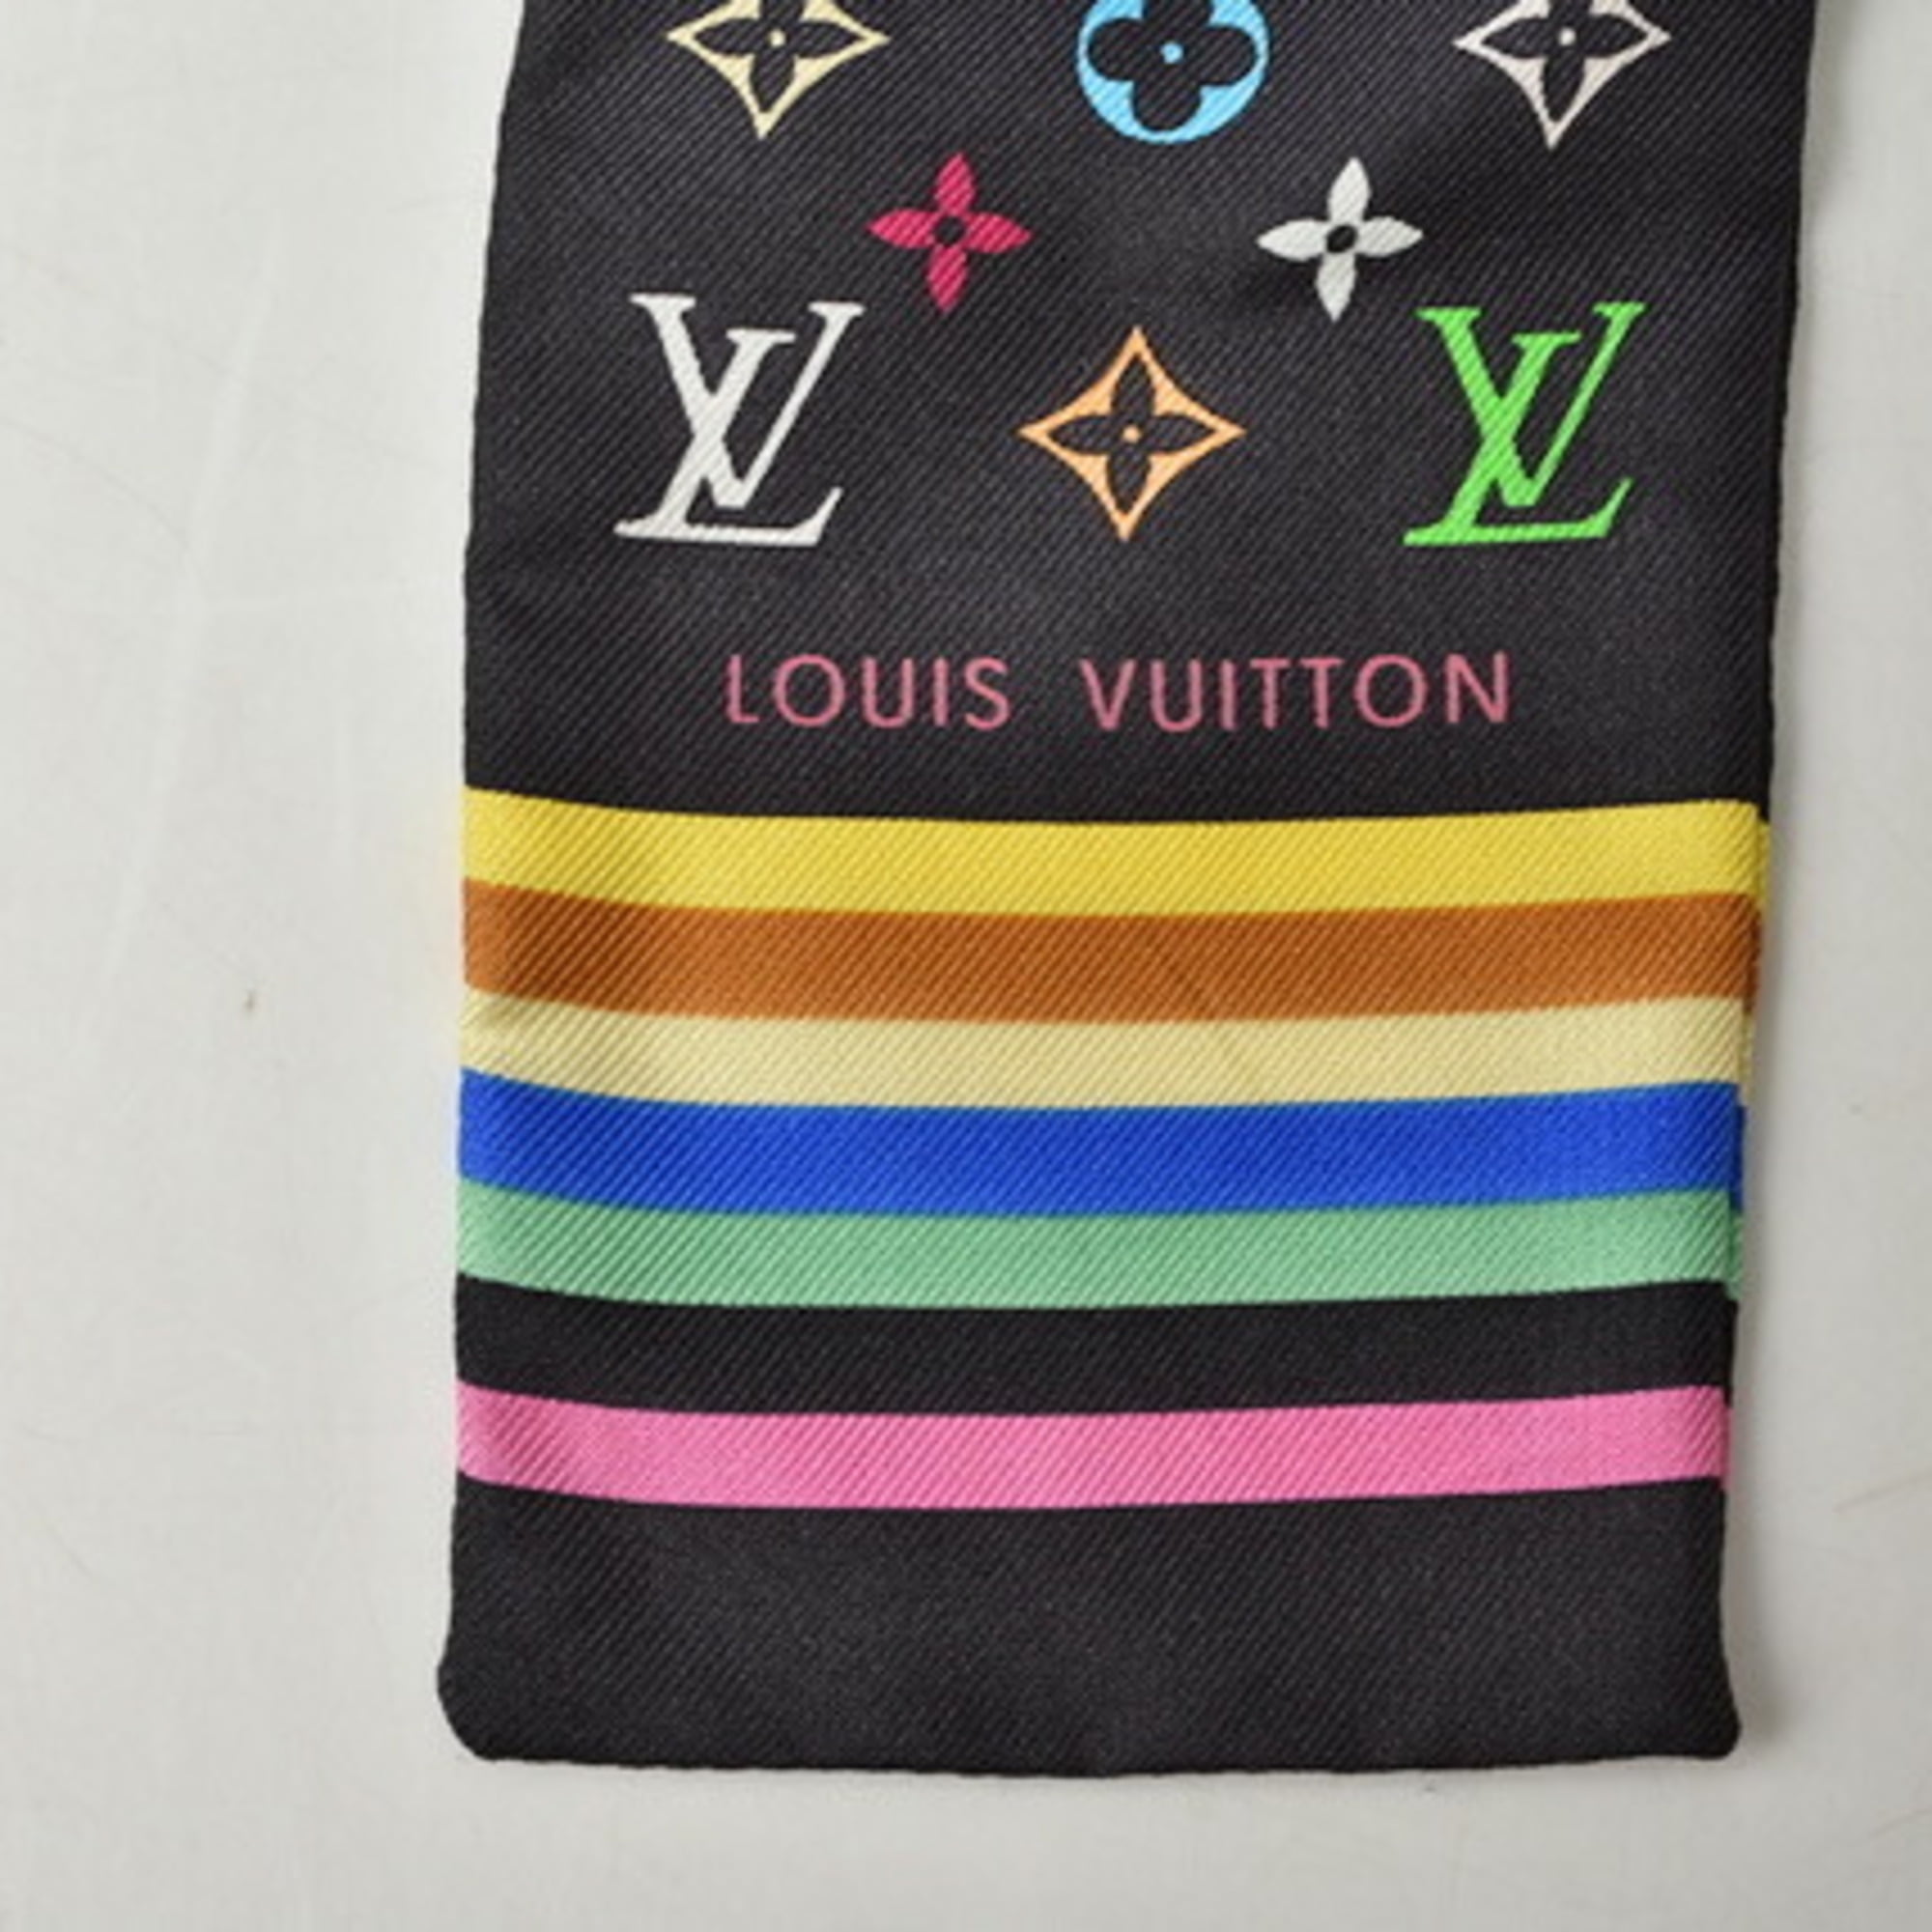 Authenticated Used Louis Vuitton Scarf Flower Black x Multicolor 70% Cotton  30% Silk 